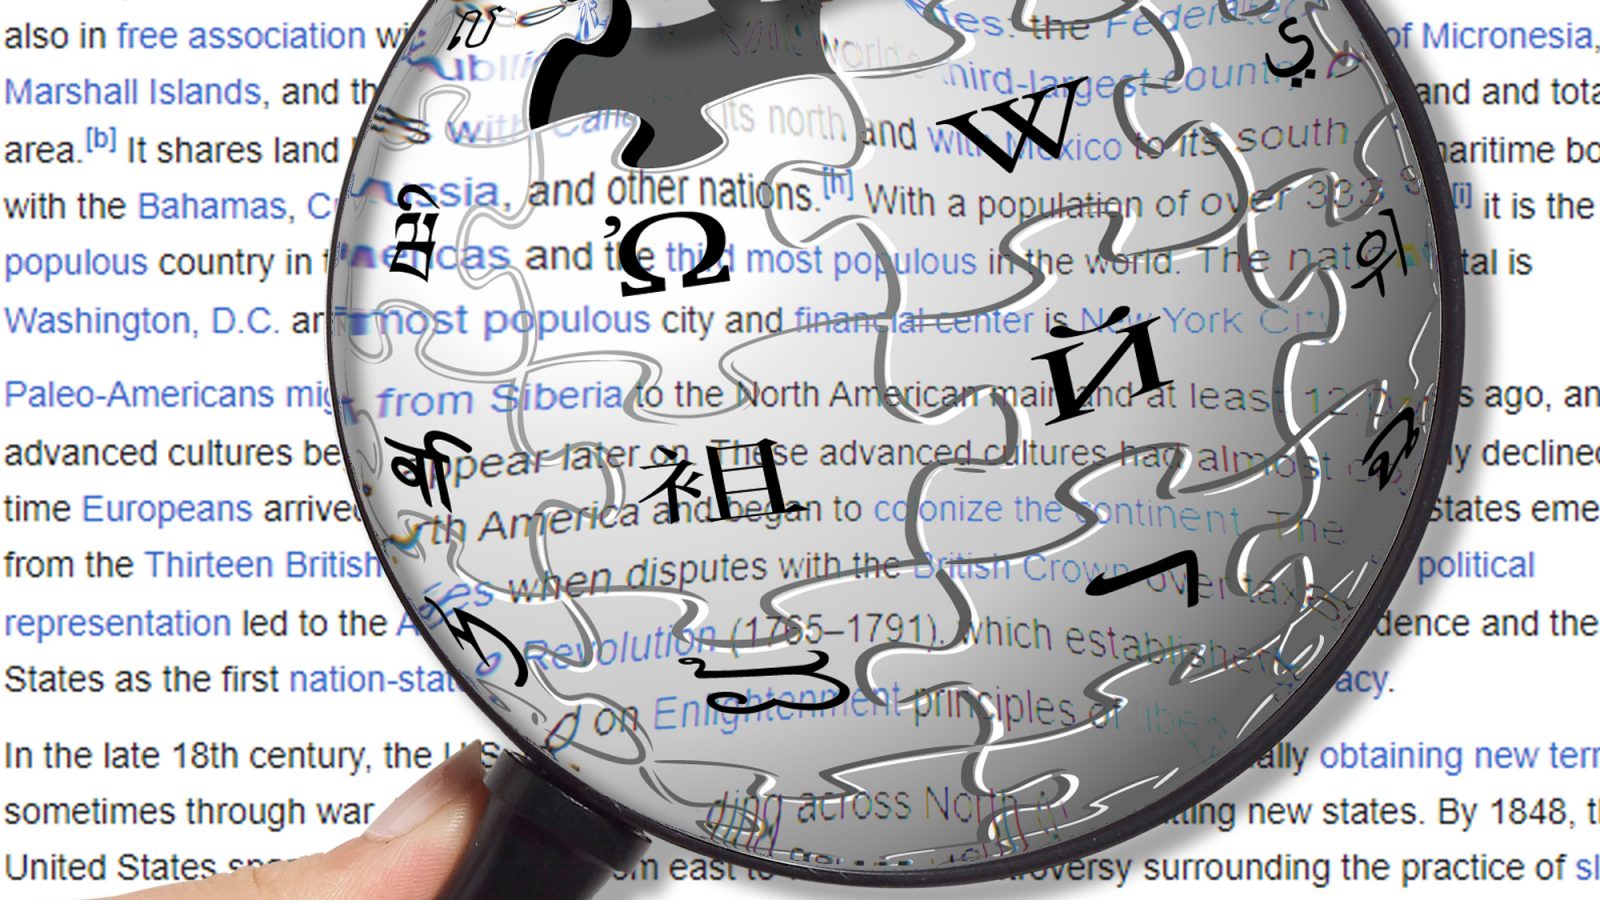 Magnifying glass - Wikipedia